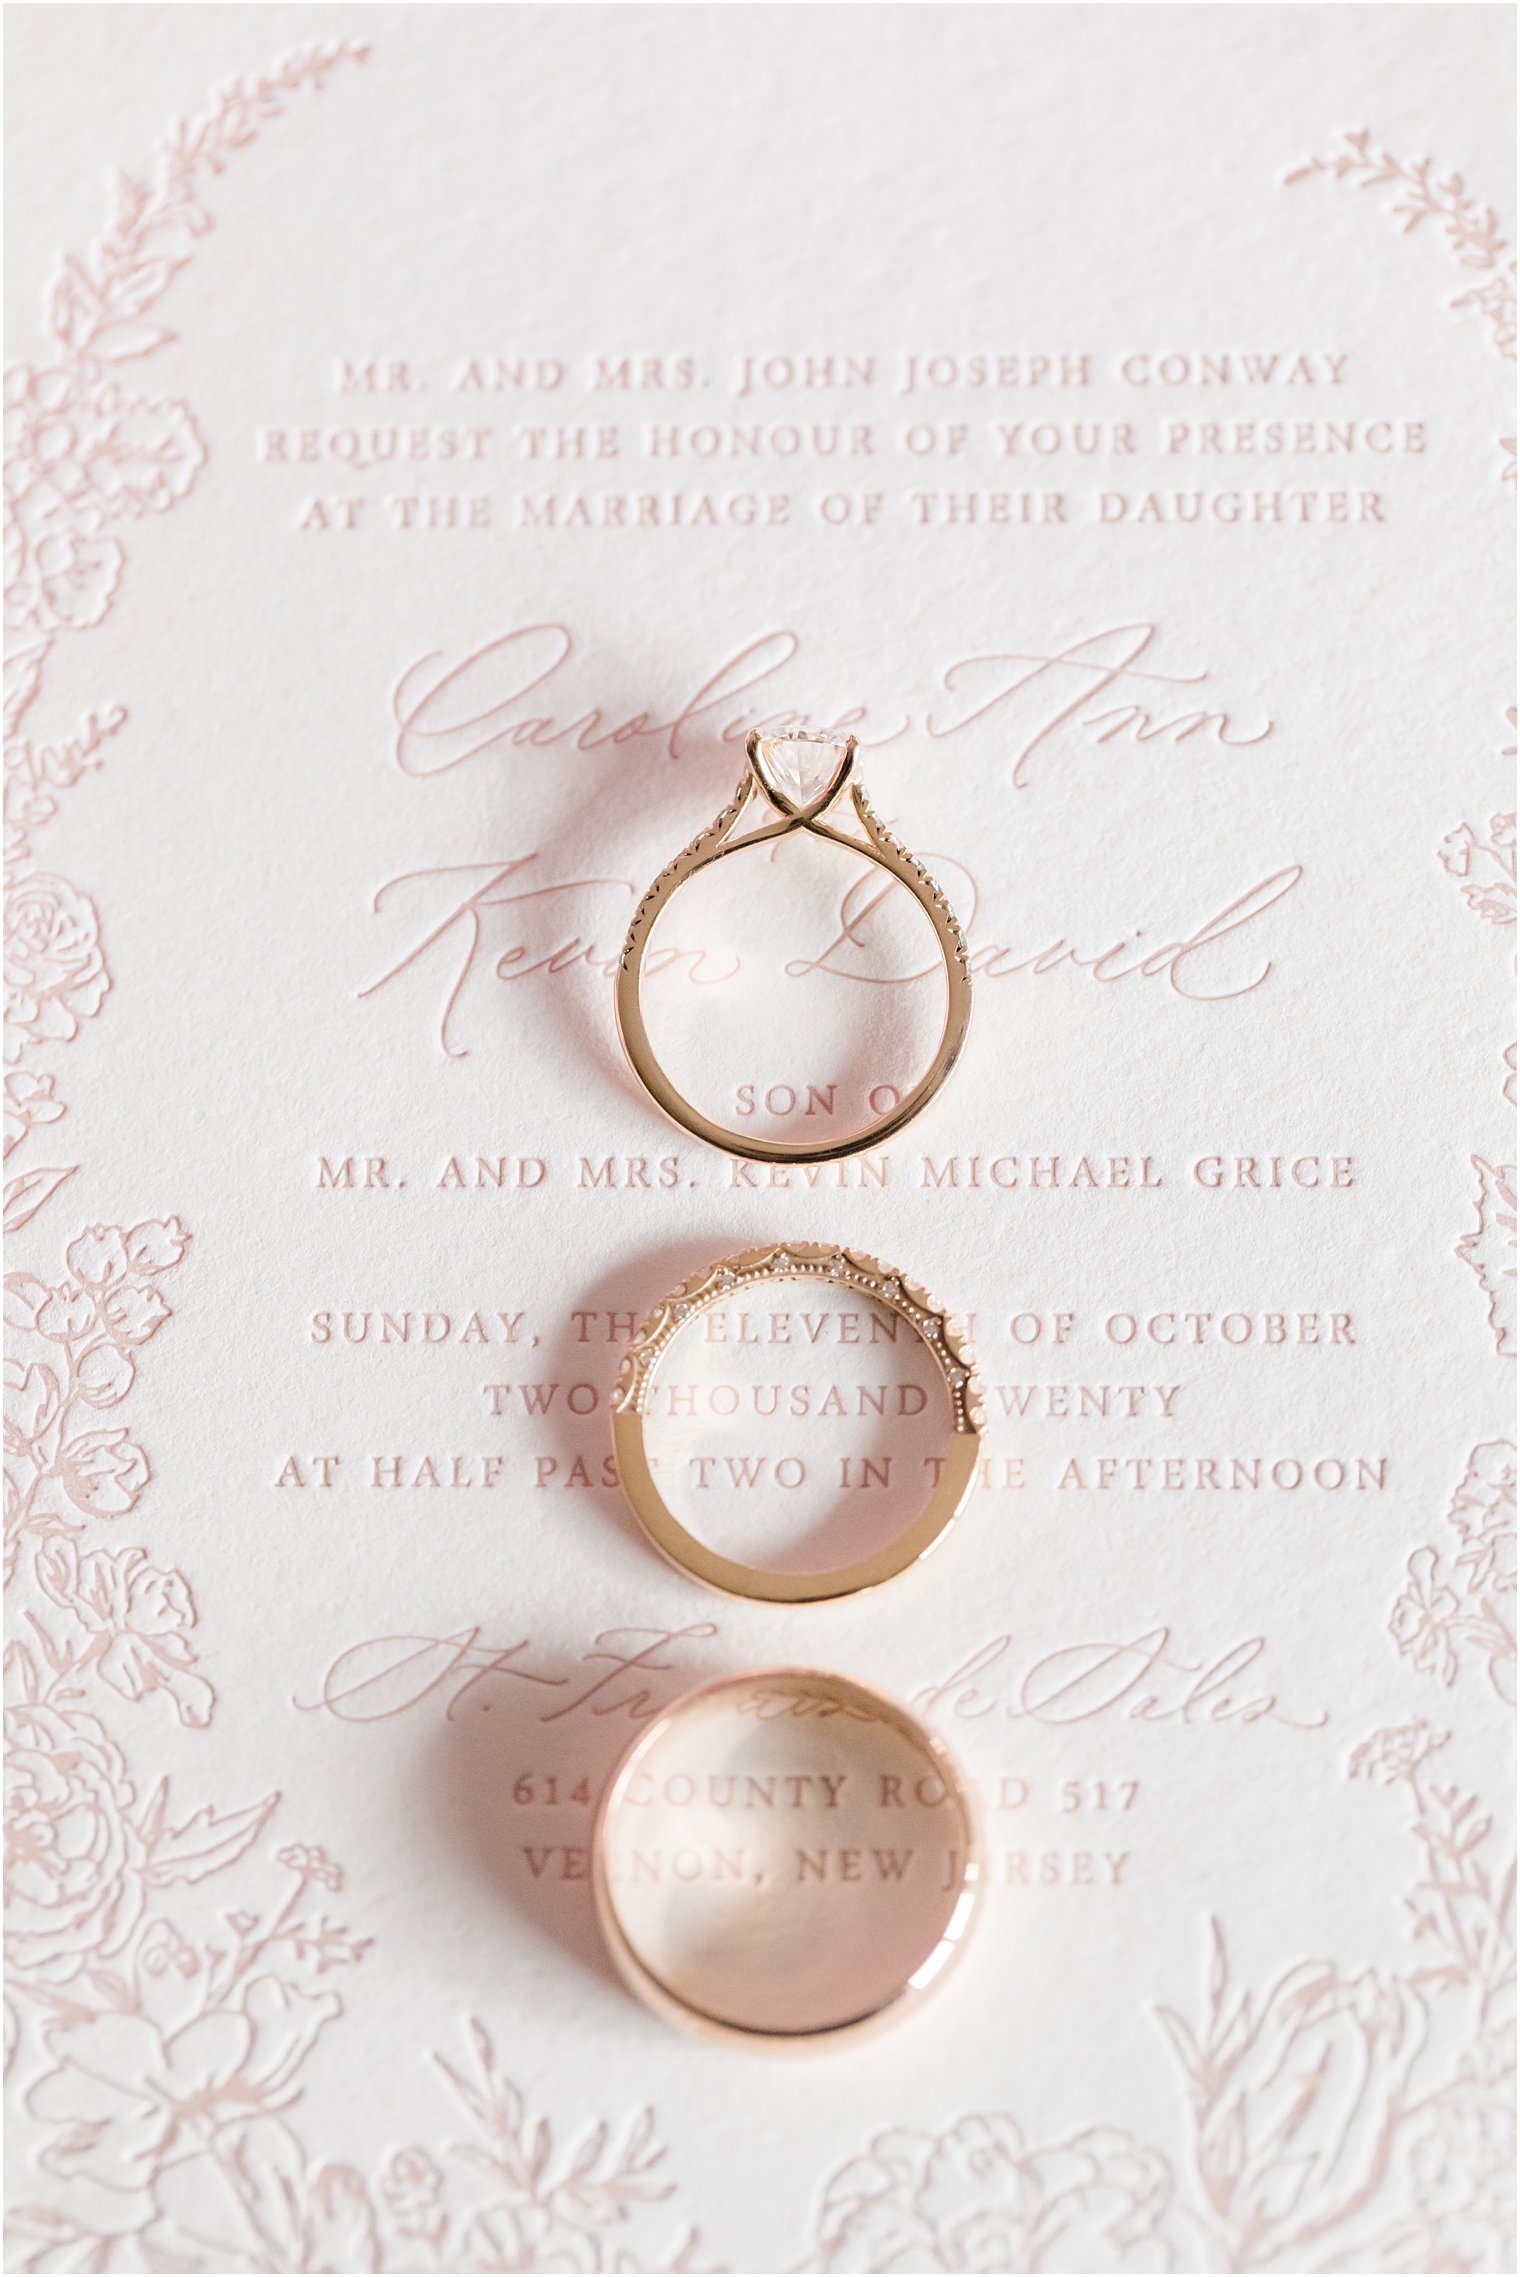 gold wedding bands sit on pink wedding invitation